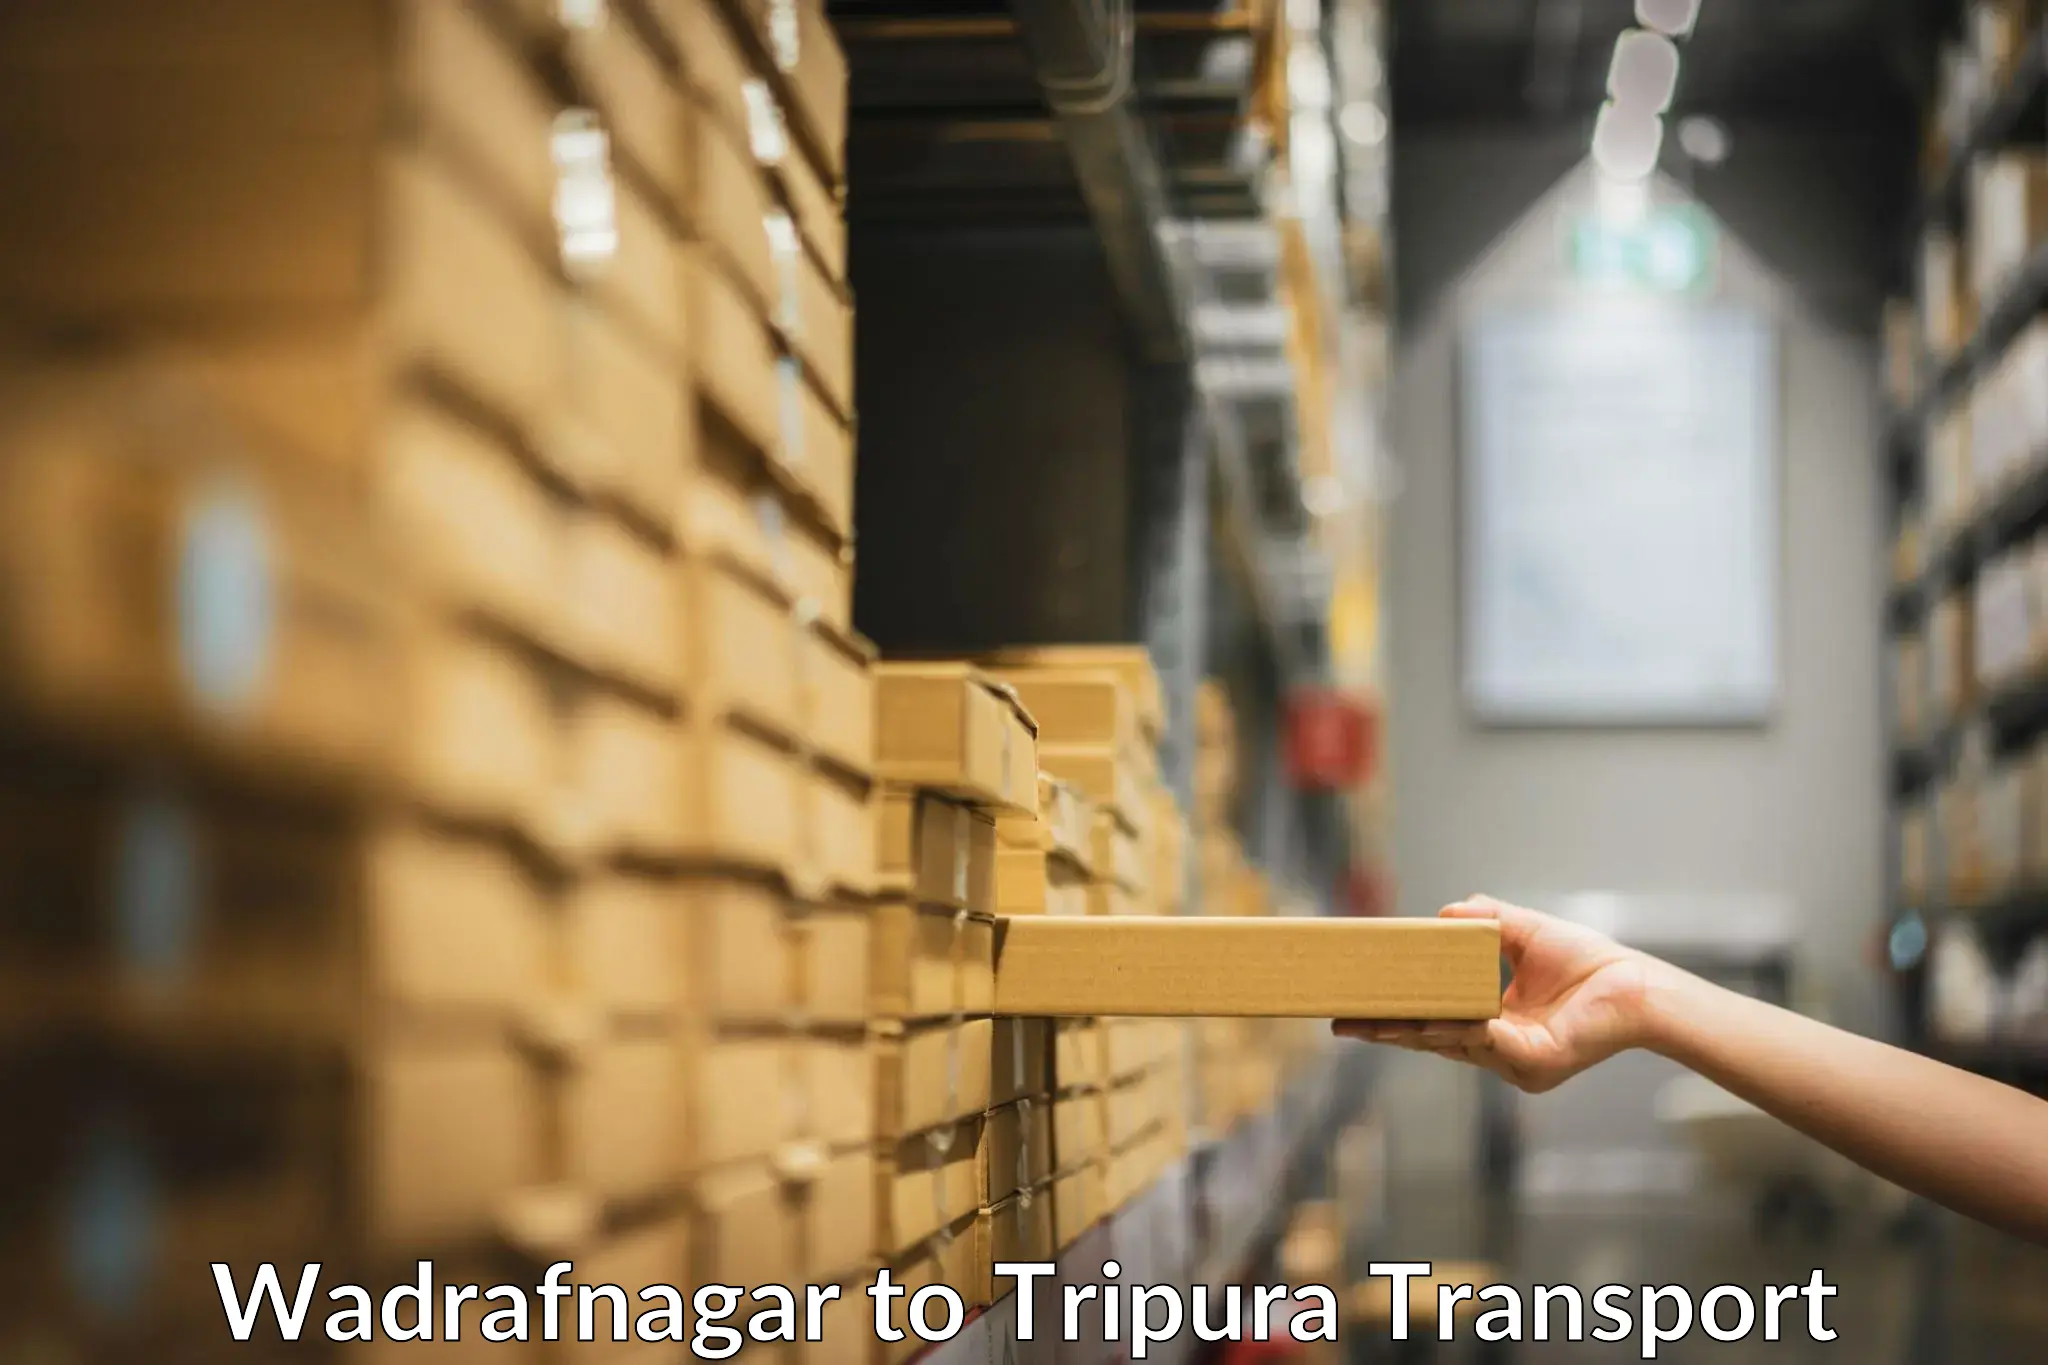 Container transportation services Wadrafnagar to Manughat